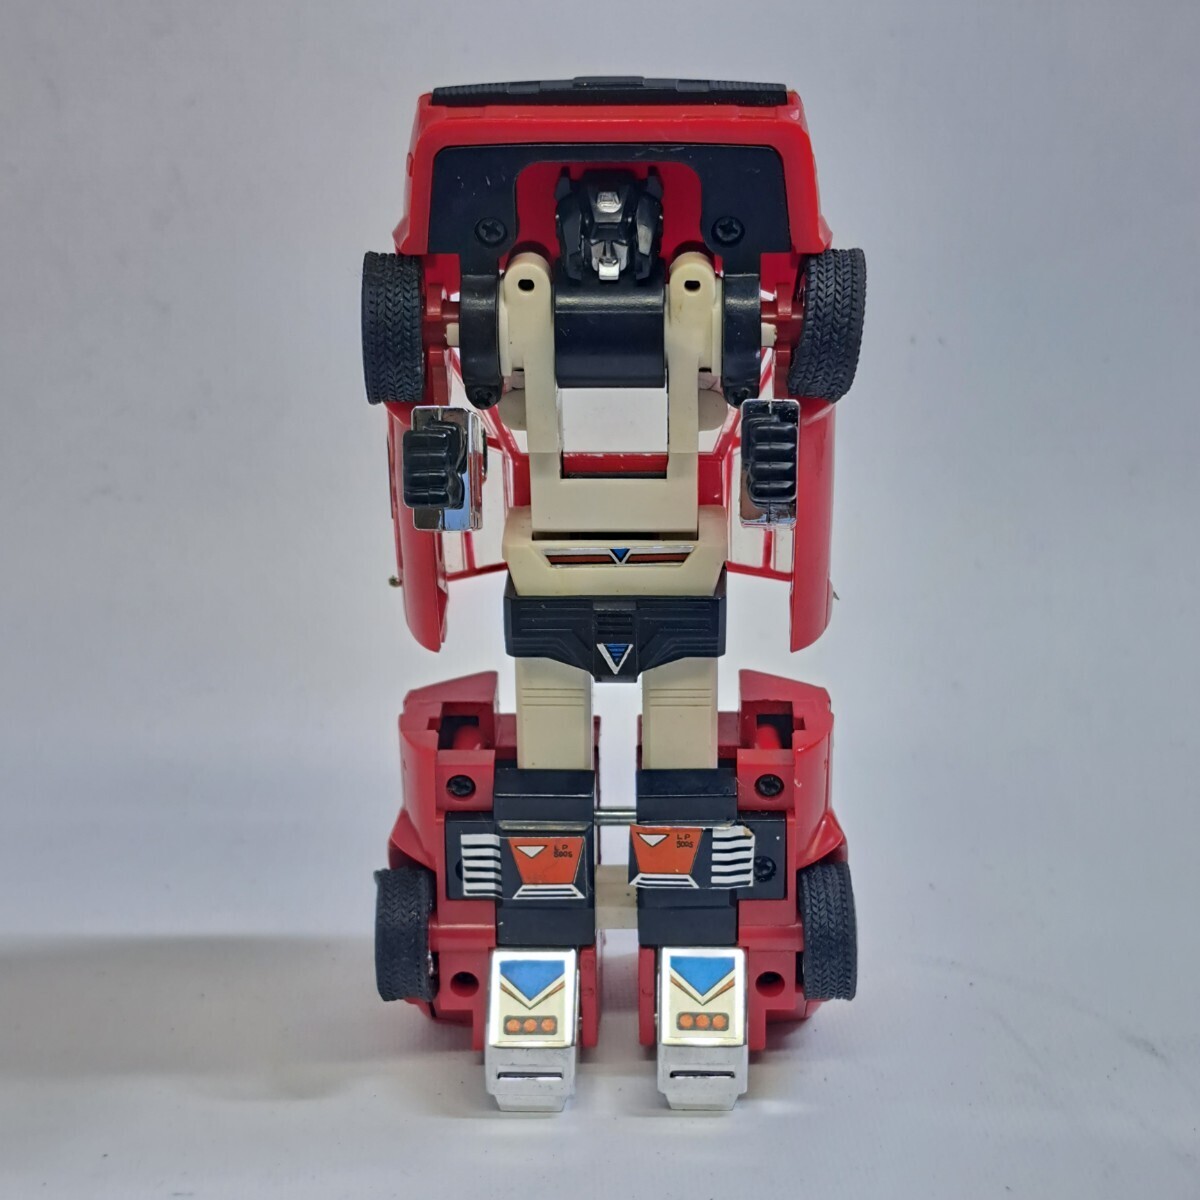  Transformer C-04 Ran boru